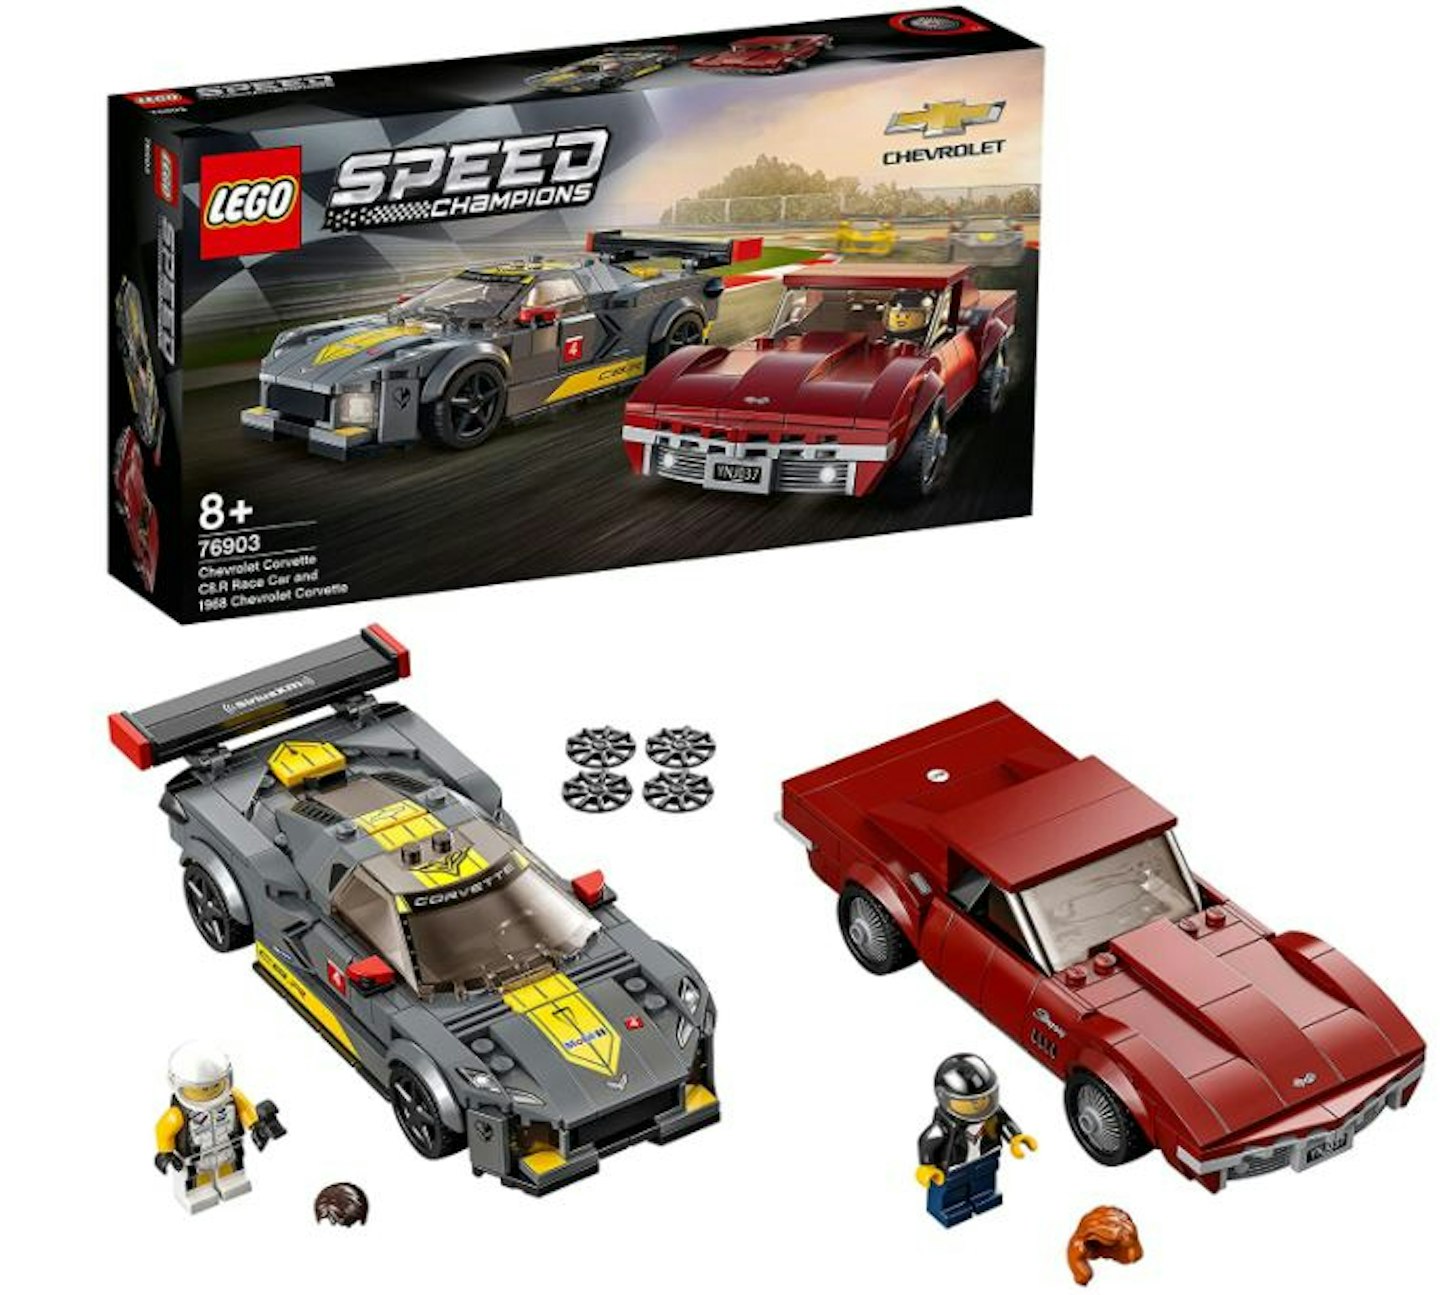 LEGO Speed Champions Chevrolet Corvette C8.R Race Car and 1968 Corvette